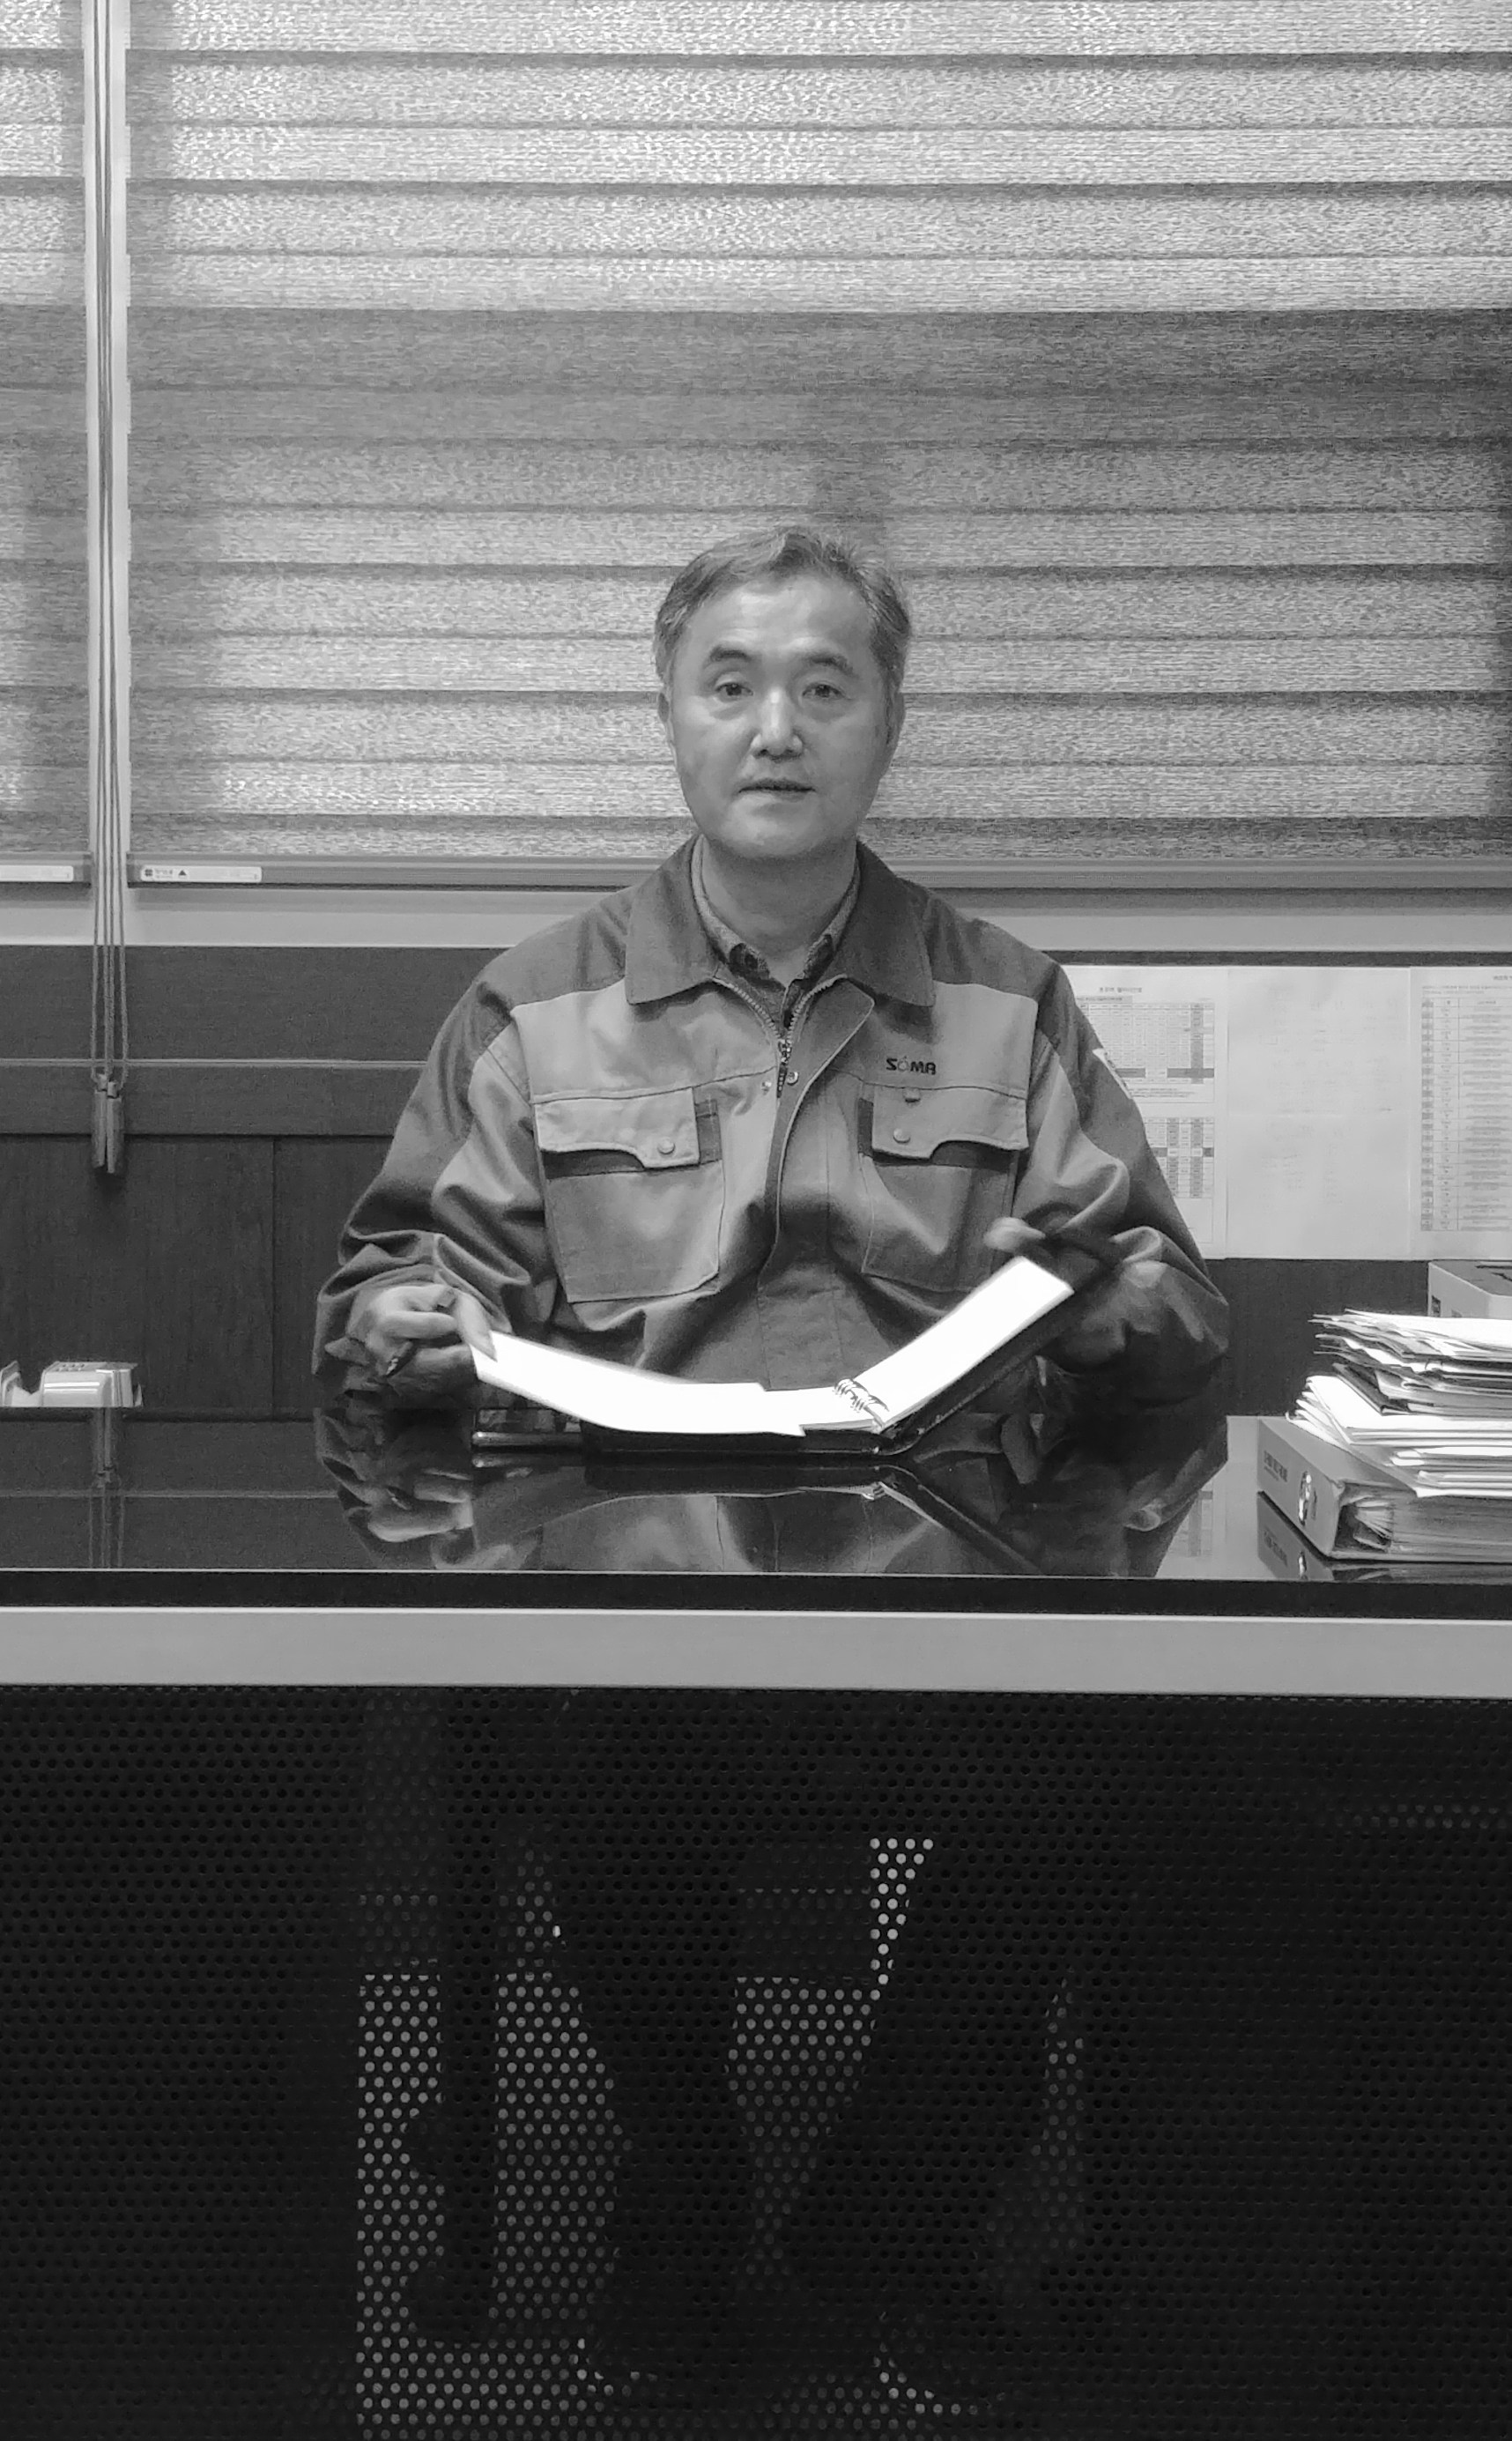 Dr Paul Soo Han, president